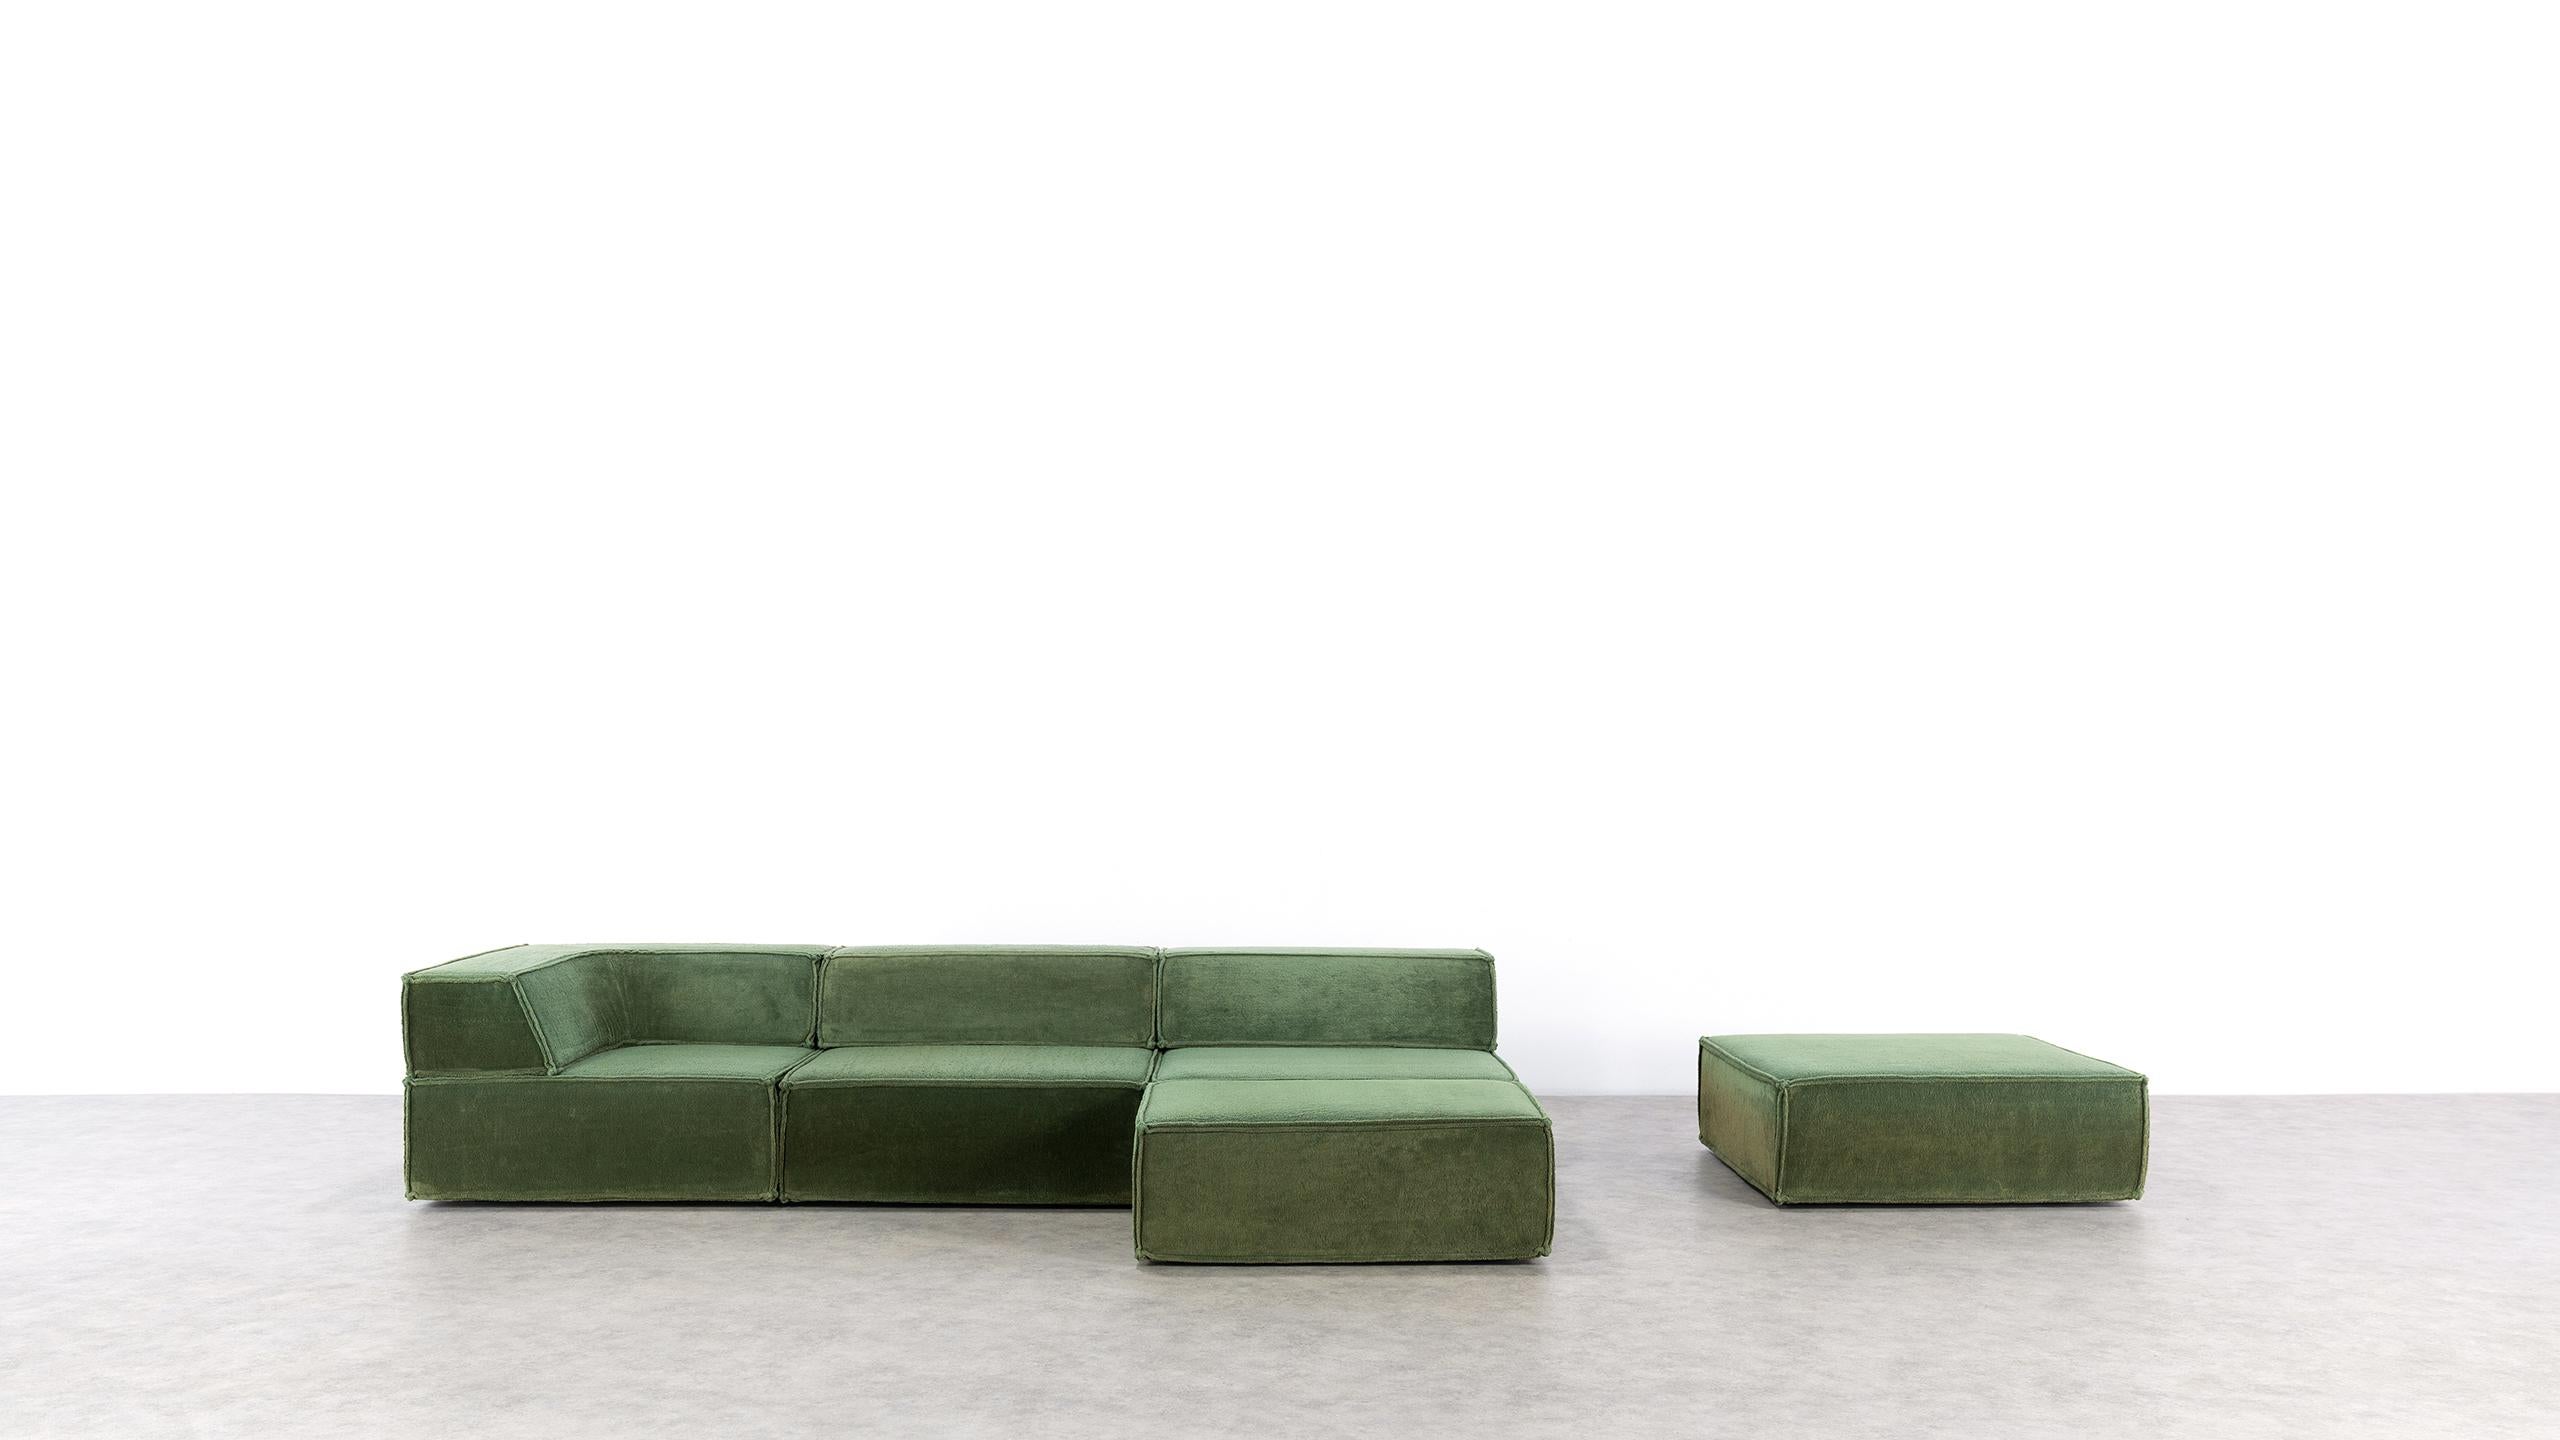 German COR Trio Modular Sofa, Giant Landscape in Green, 1972 by Team Form AG, Swiss